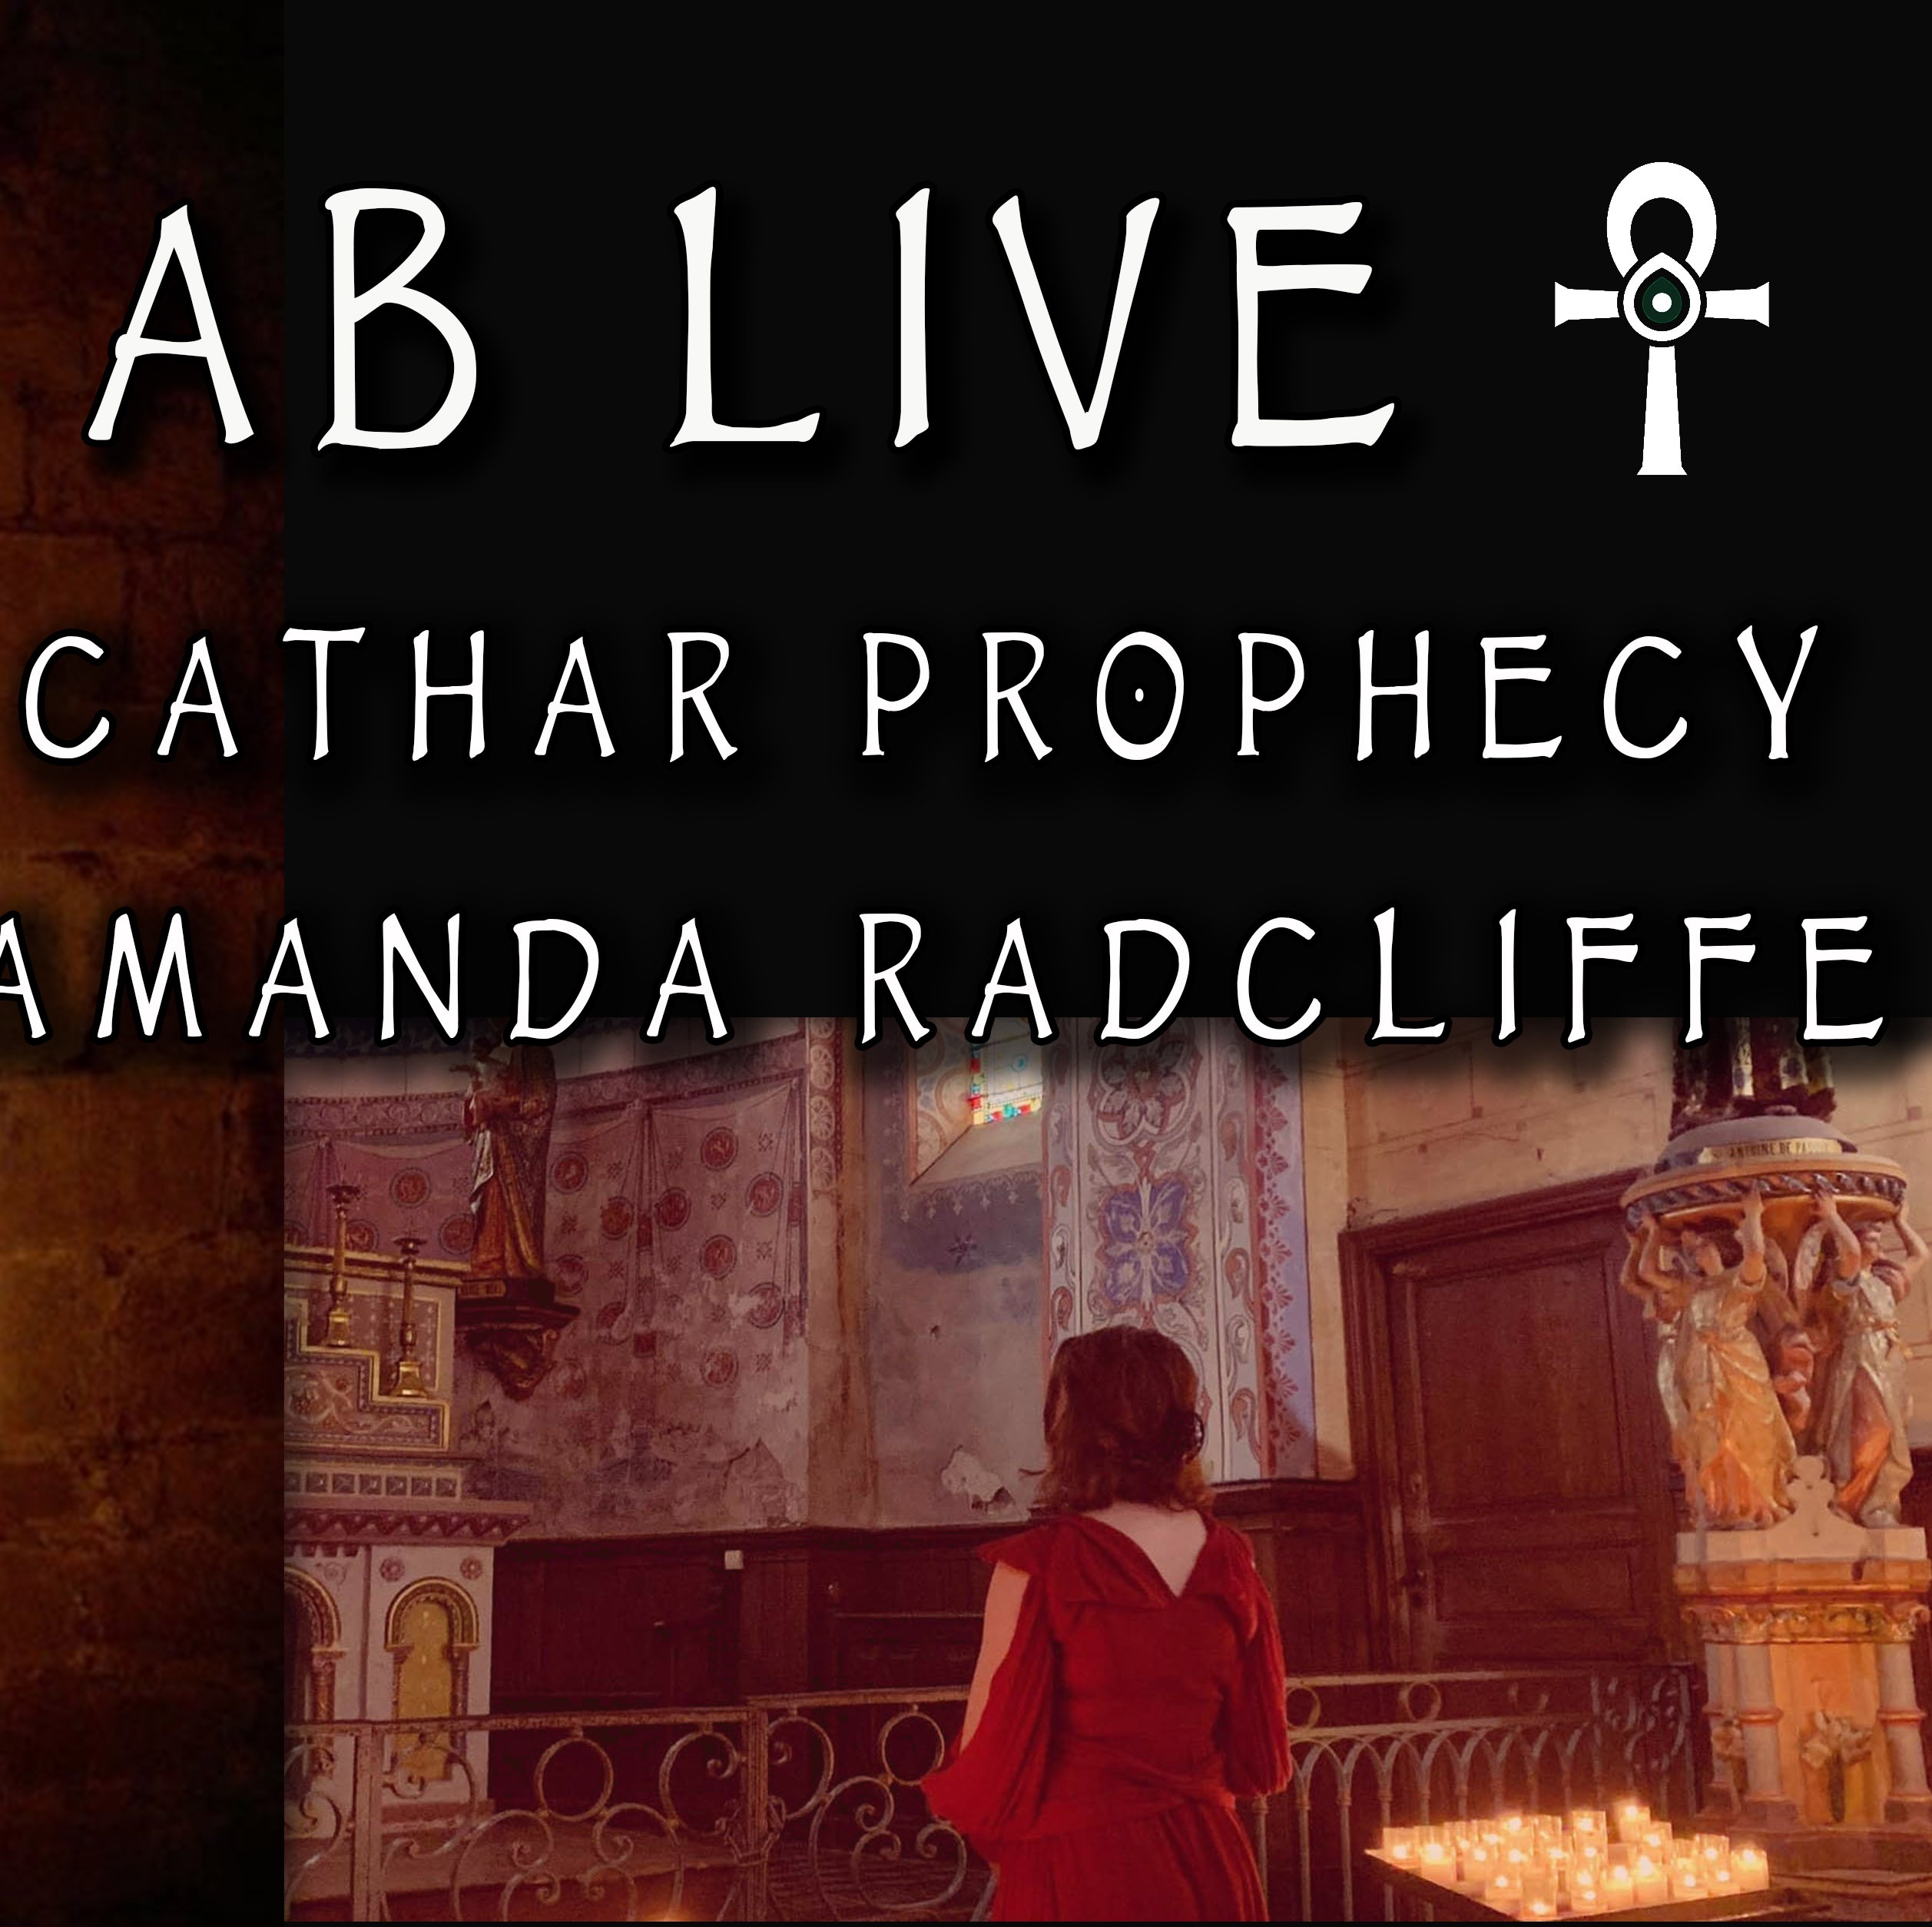 Amanda Radcliffe on Cathar Prophecy